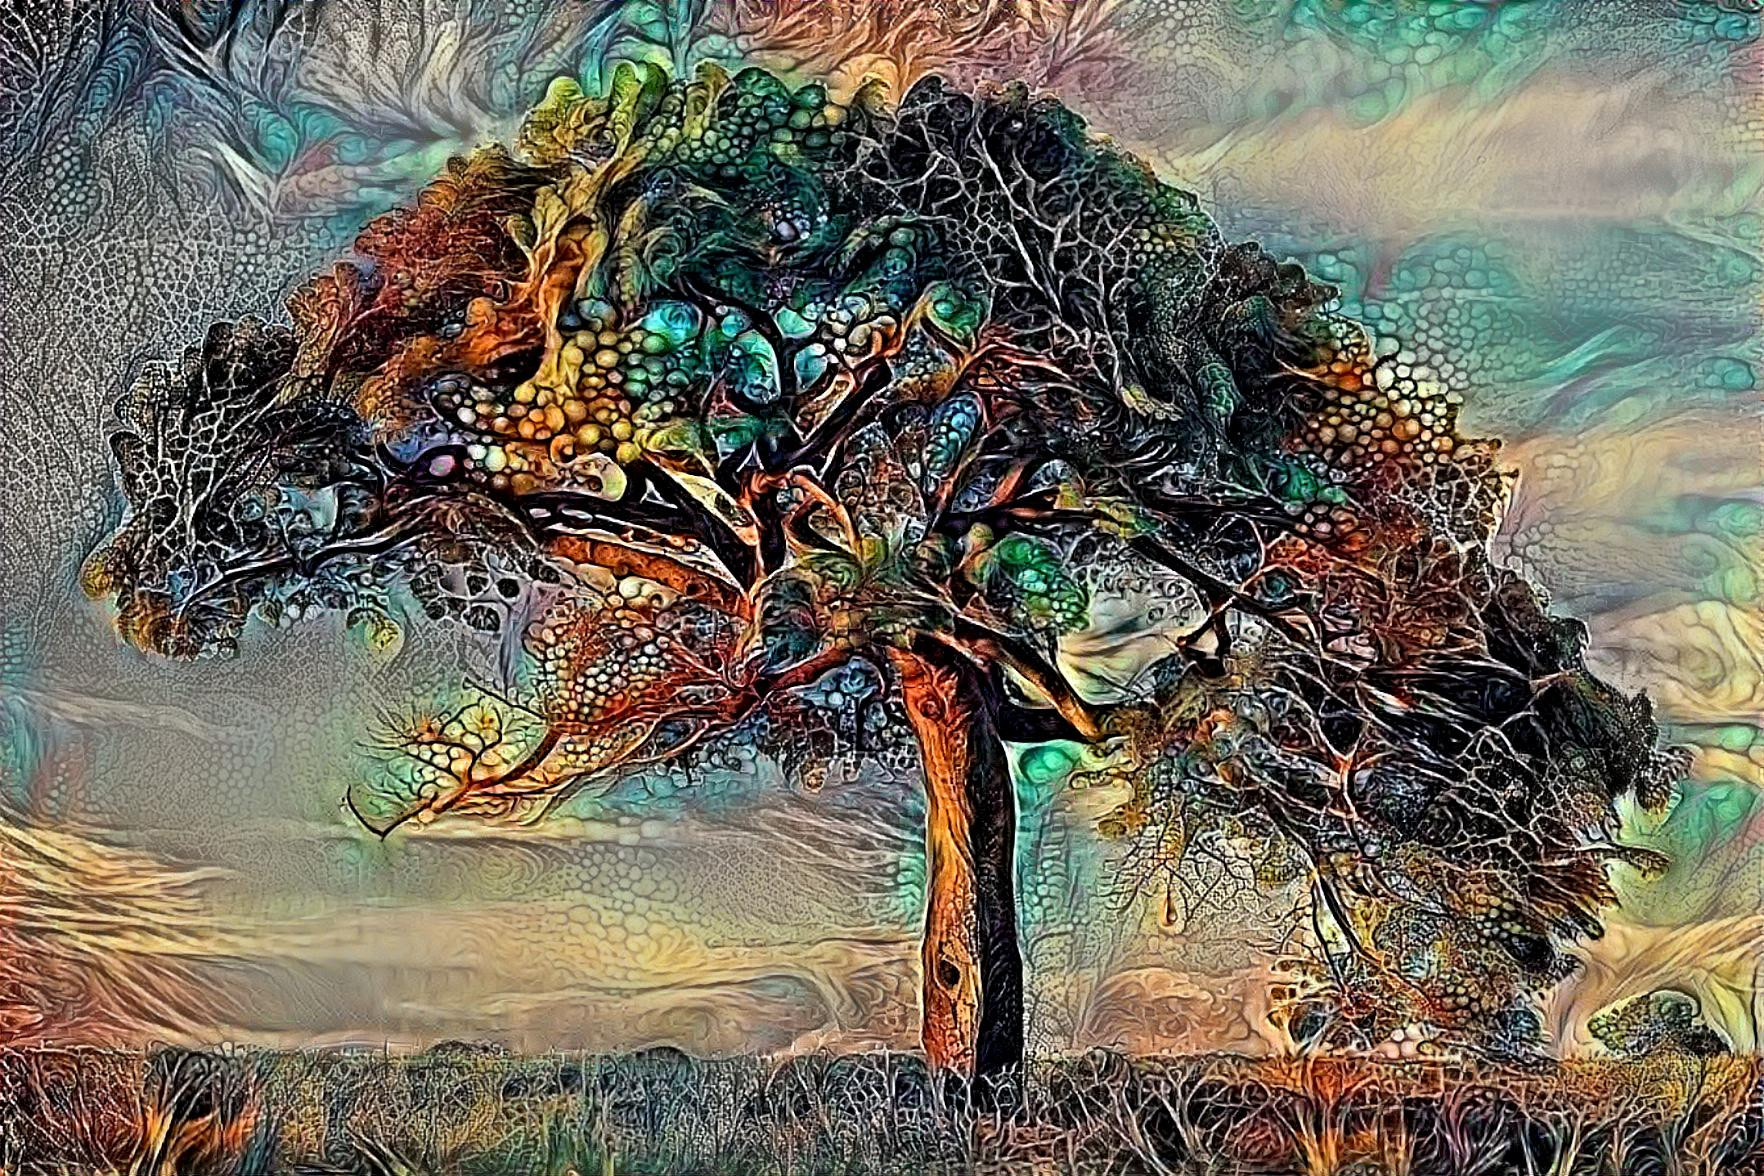 Awesome Tree!